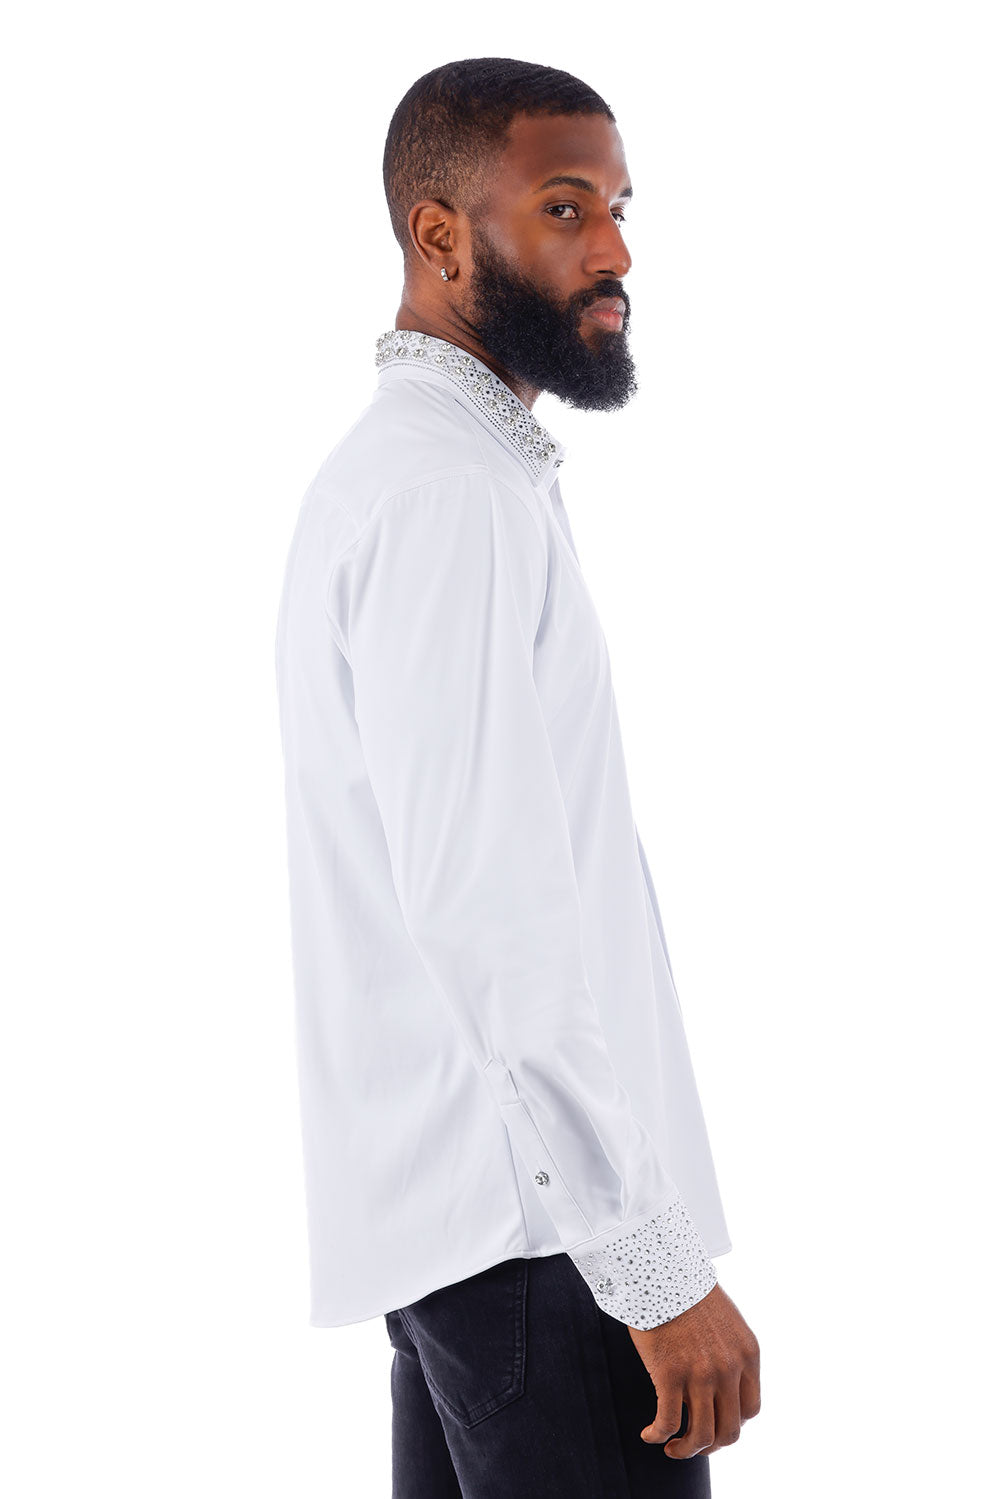 BARABAS Men's Rhinestone Collar Cuff Long Sleeve Shirt 3B29 White